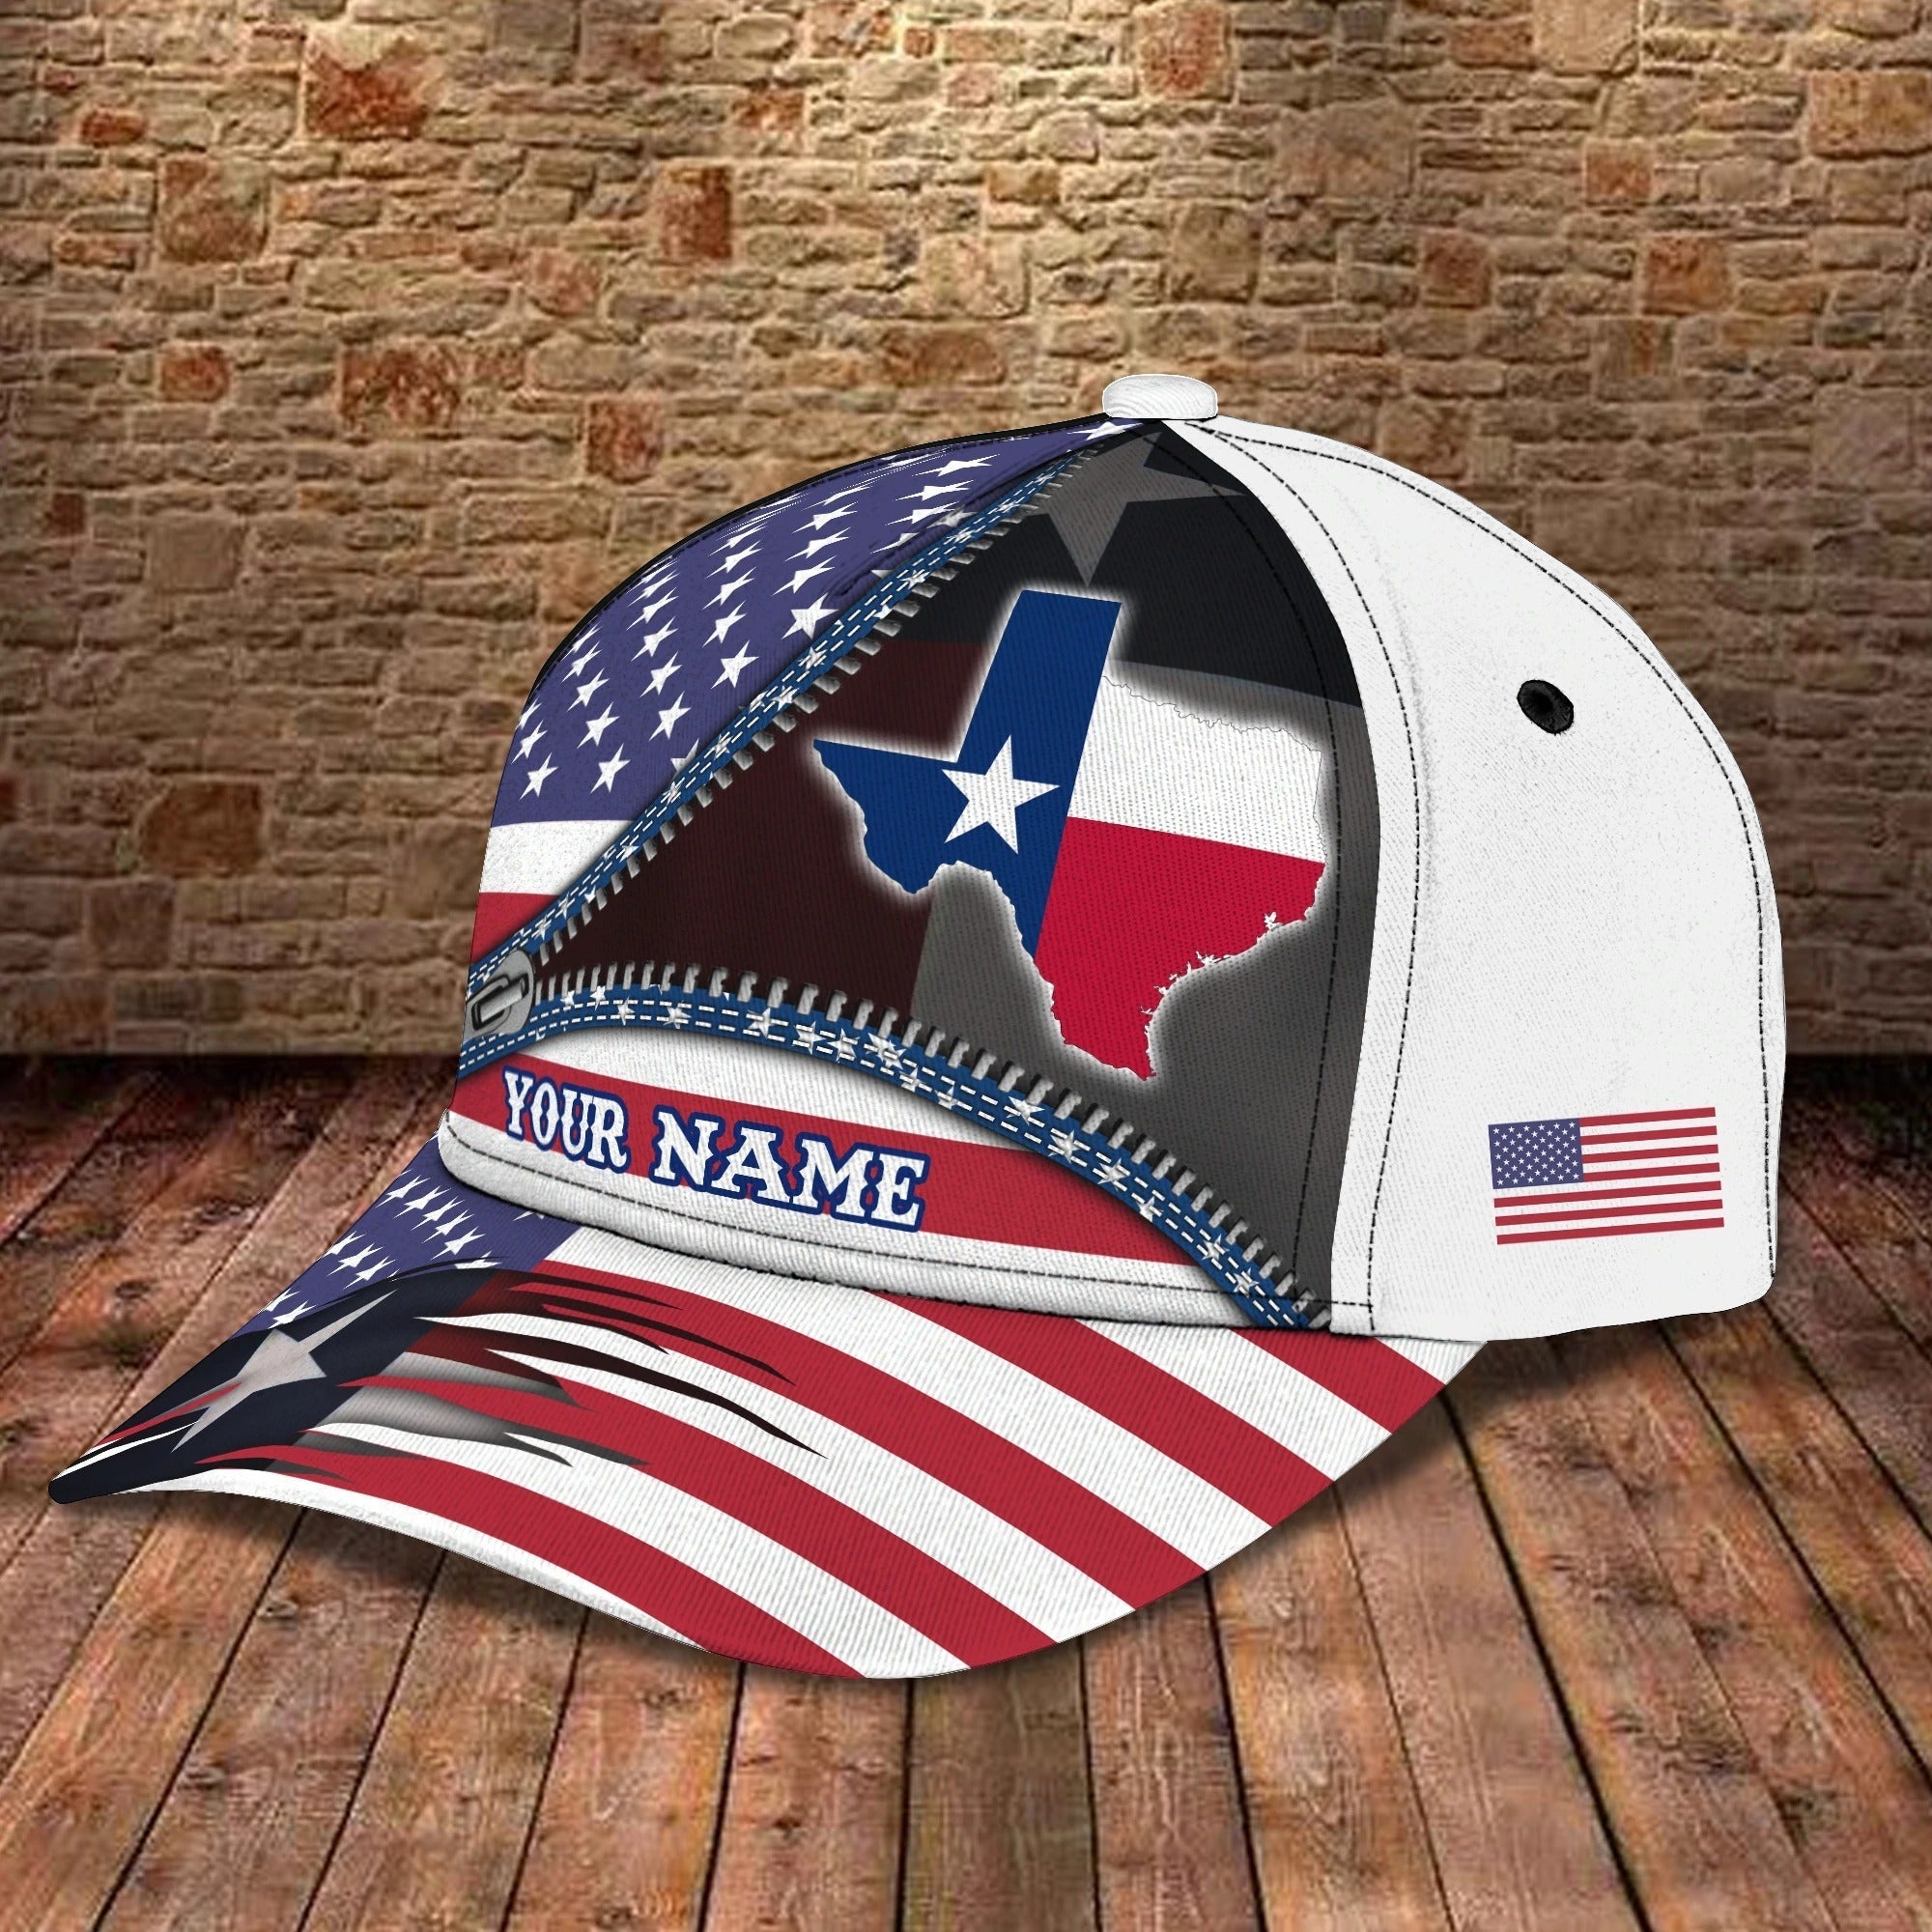 Personalized 3D All Over Print Texas Cap/ Baseball Cap God Bless Texas/ Pray For Texas Cap Hat